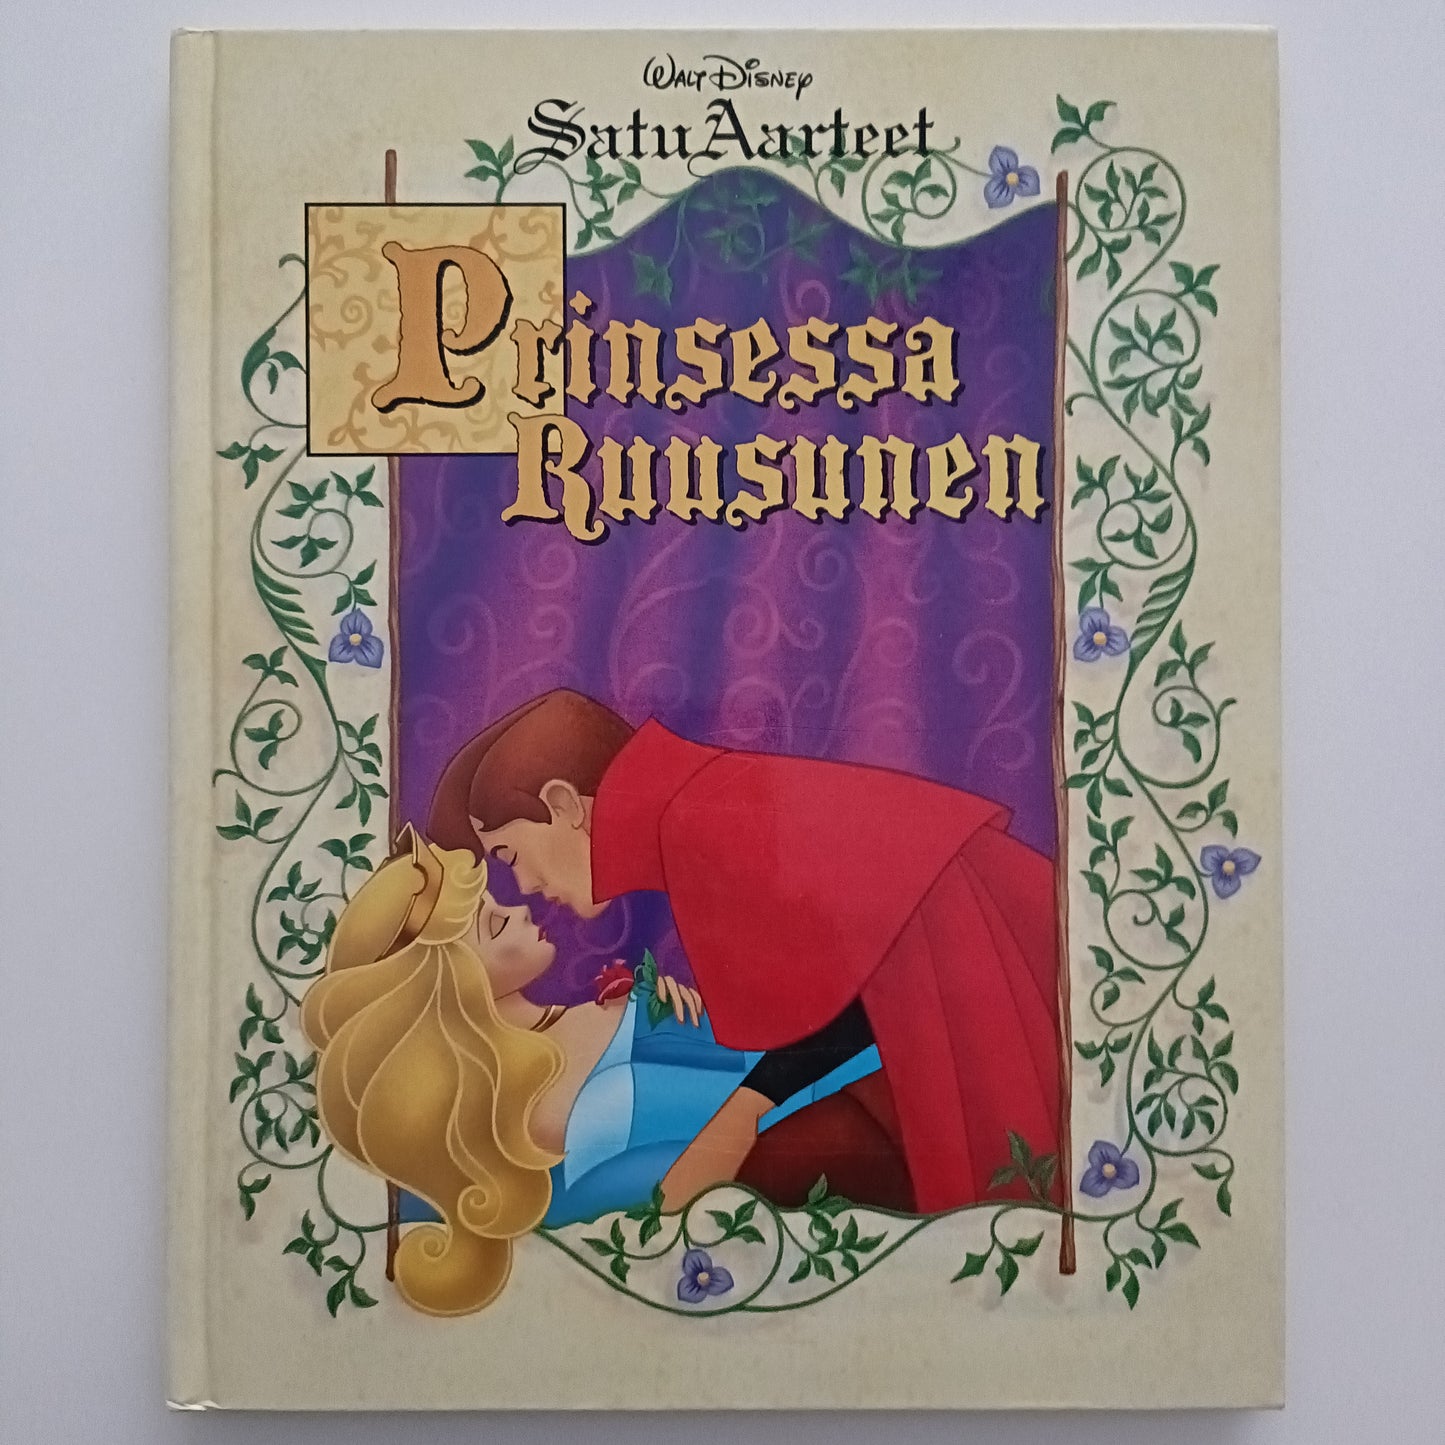 Walt Disney SatuAarteet - Prinsessa Ruusunen